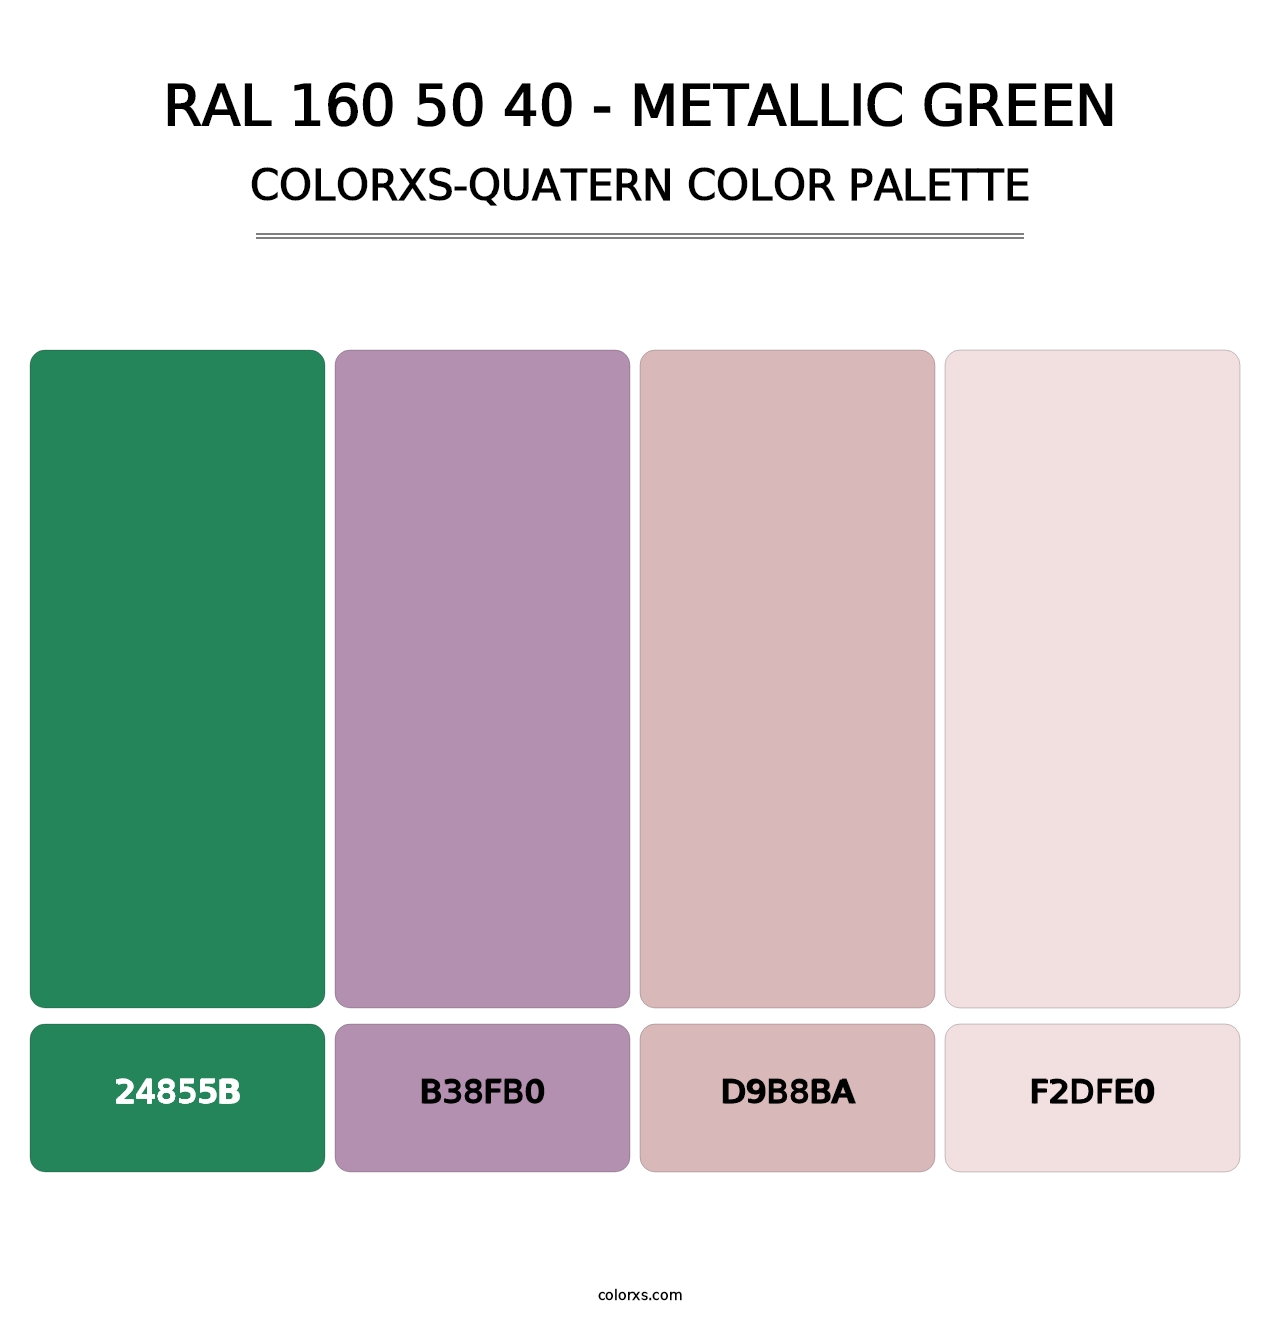 RAL 160 50 40 - Metallic Green - Colorxs Quatern Palette